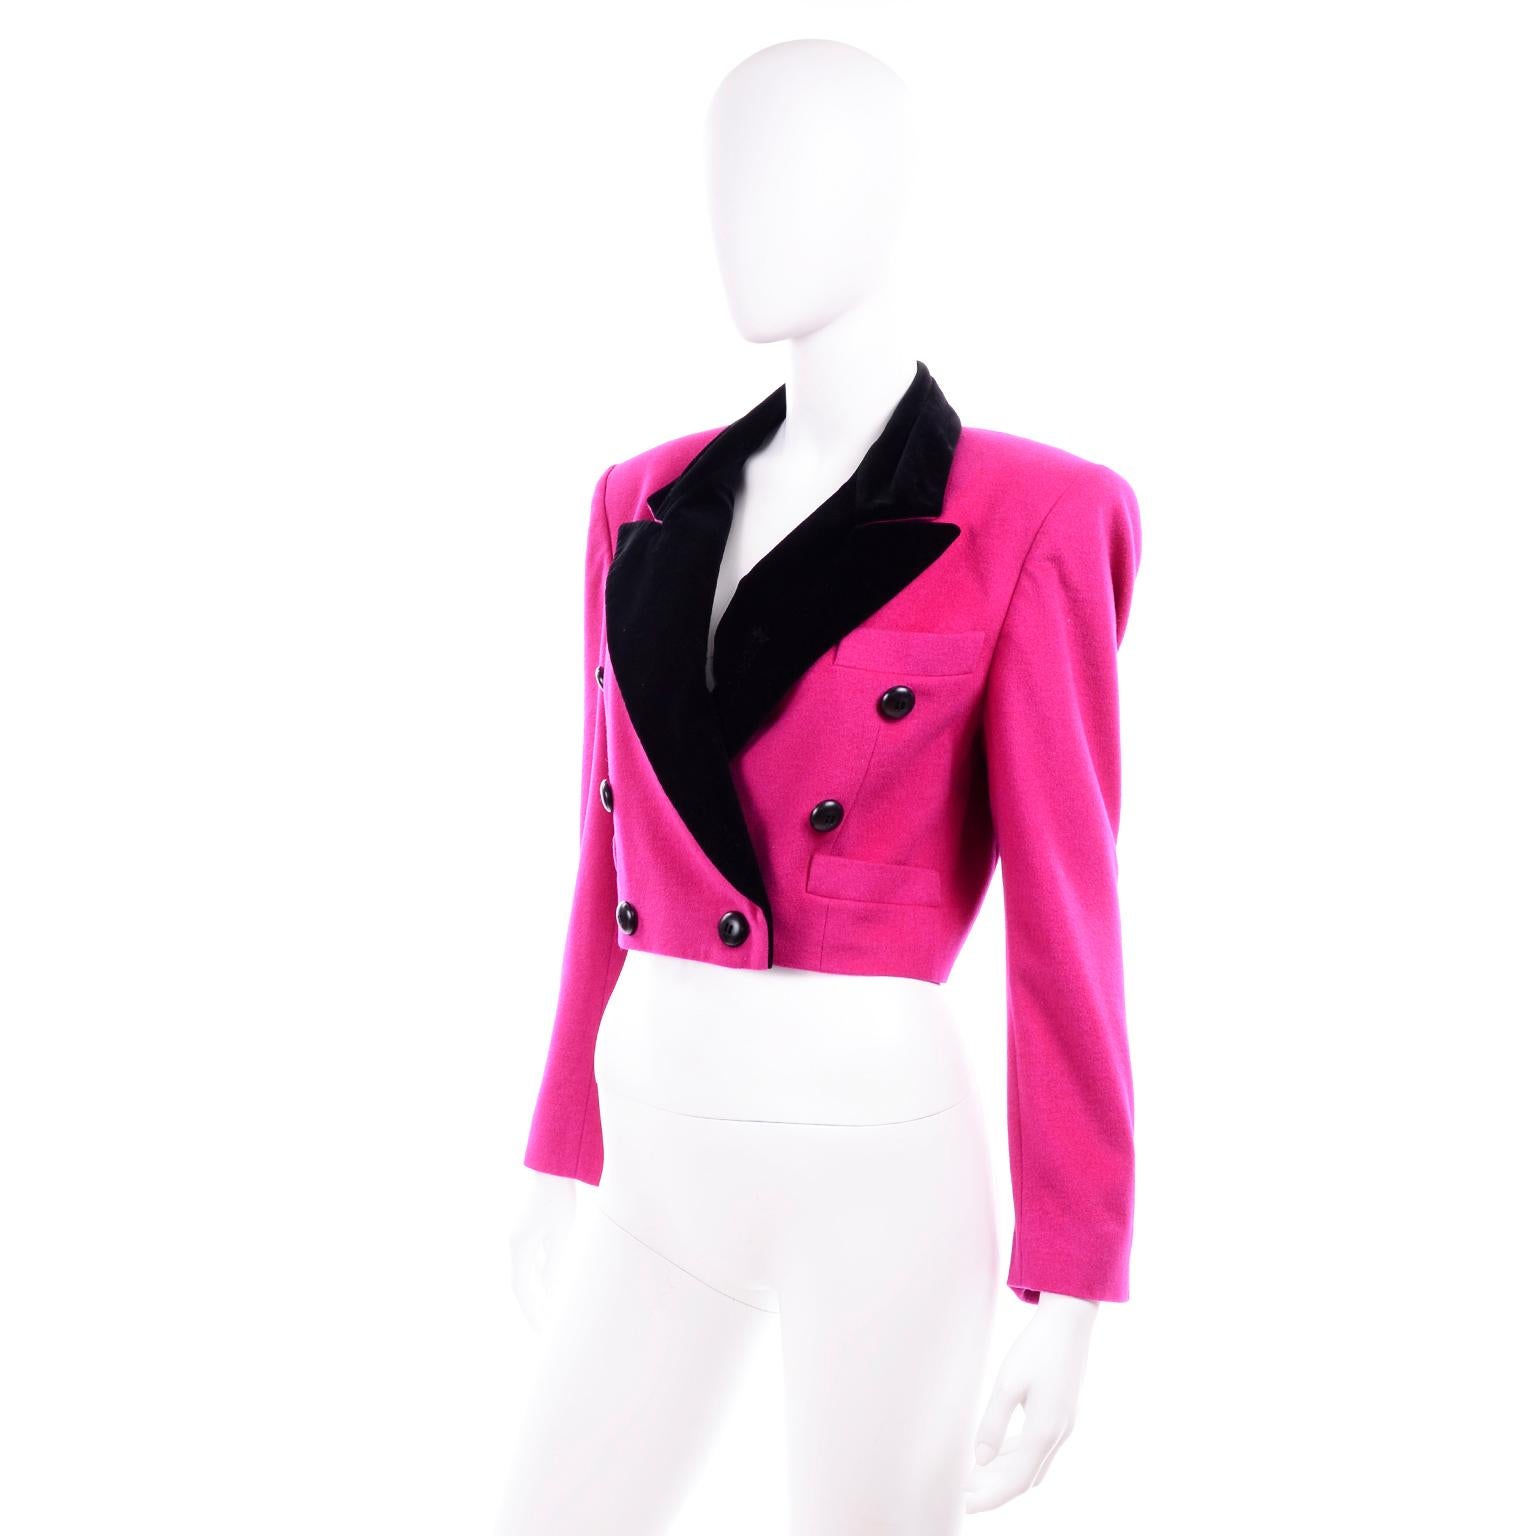 bright pink jacket